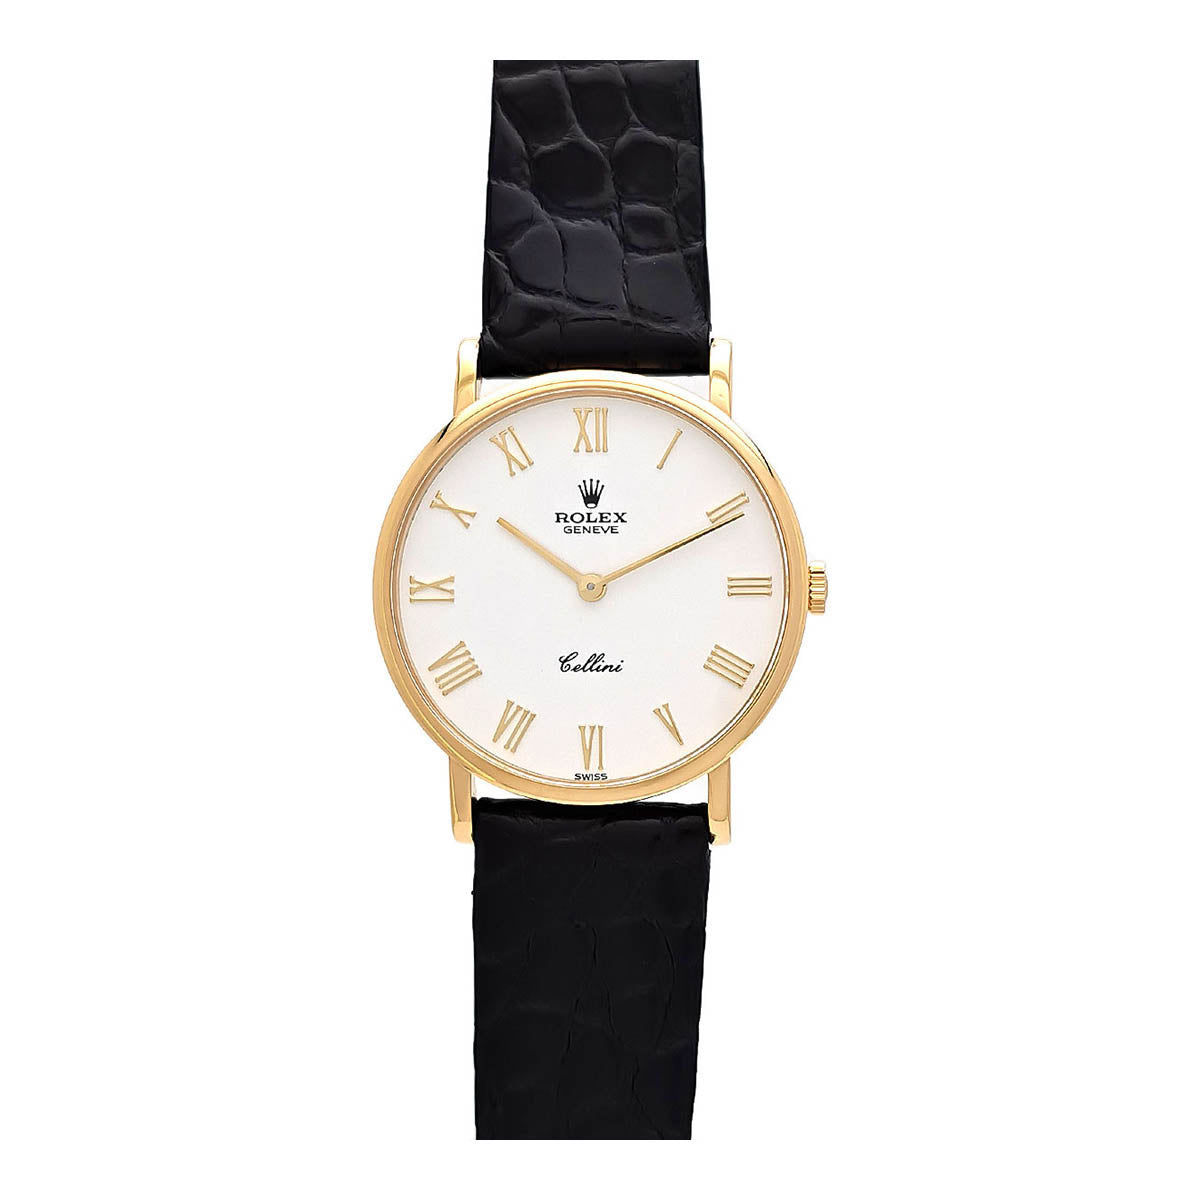 Manual Cellini Wrist Watch 5112.0